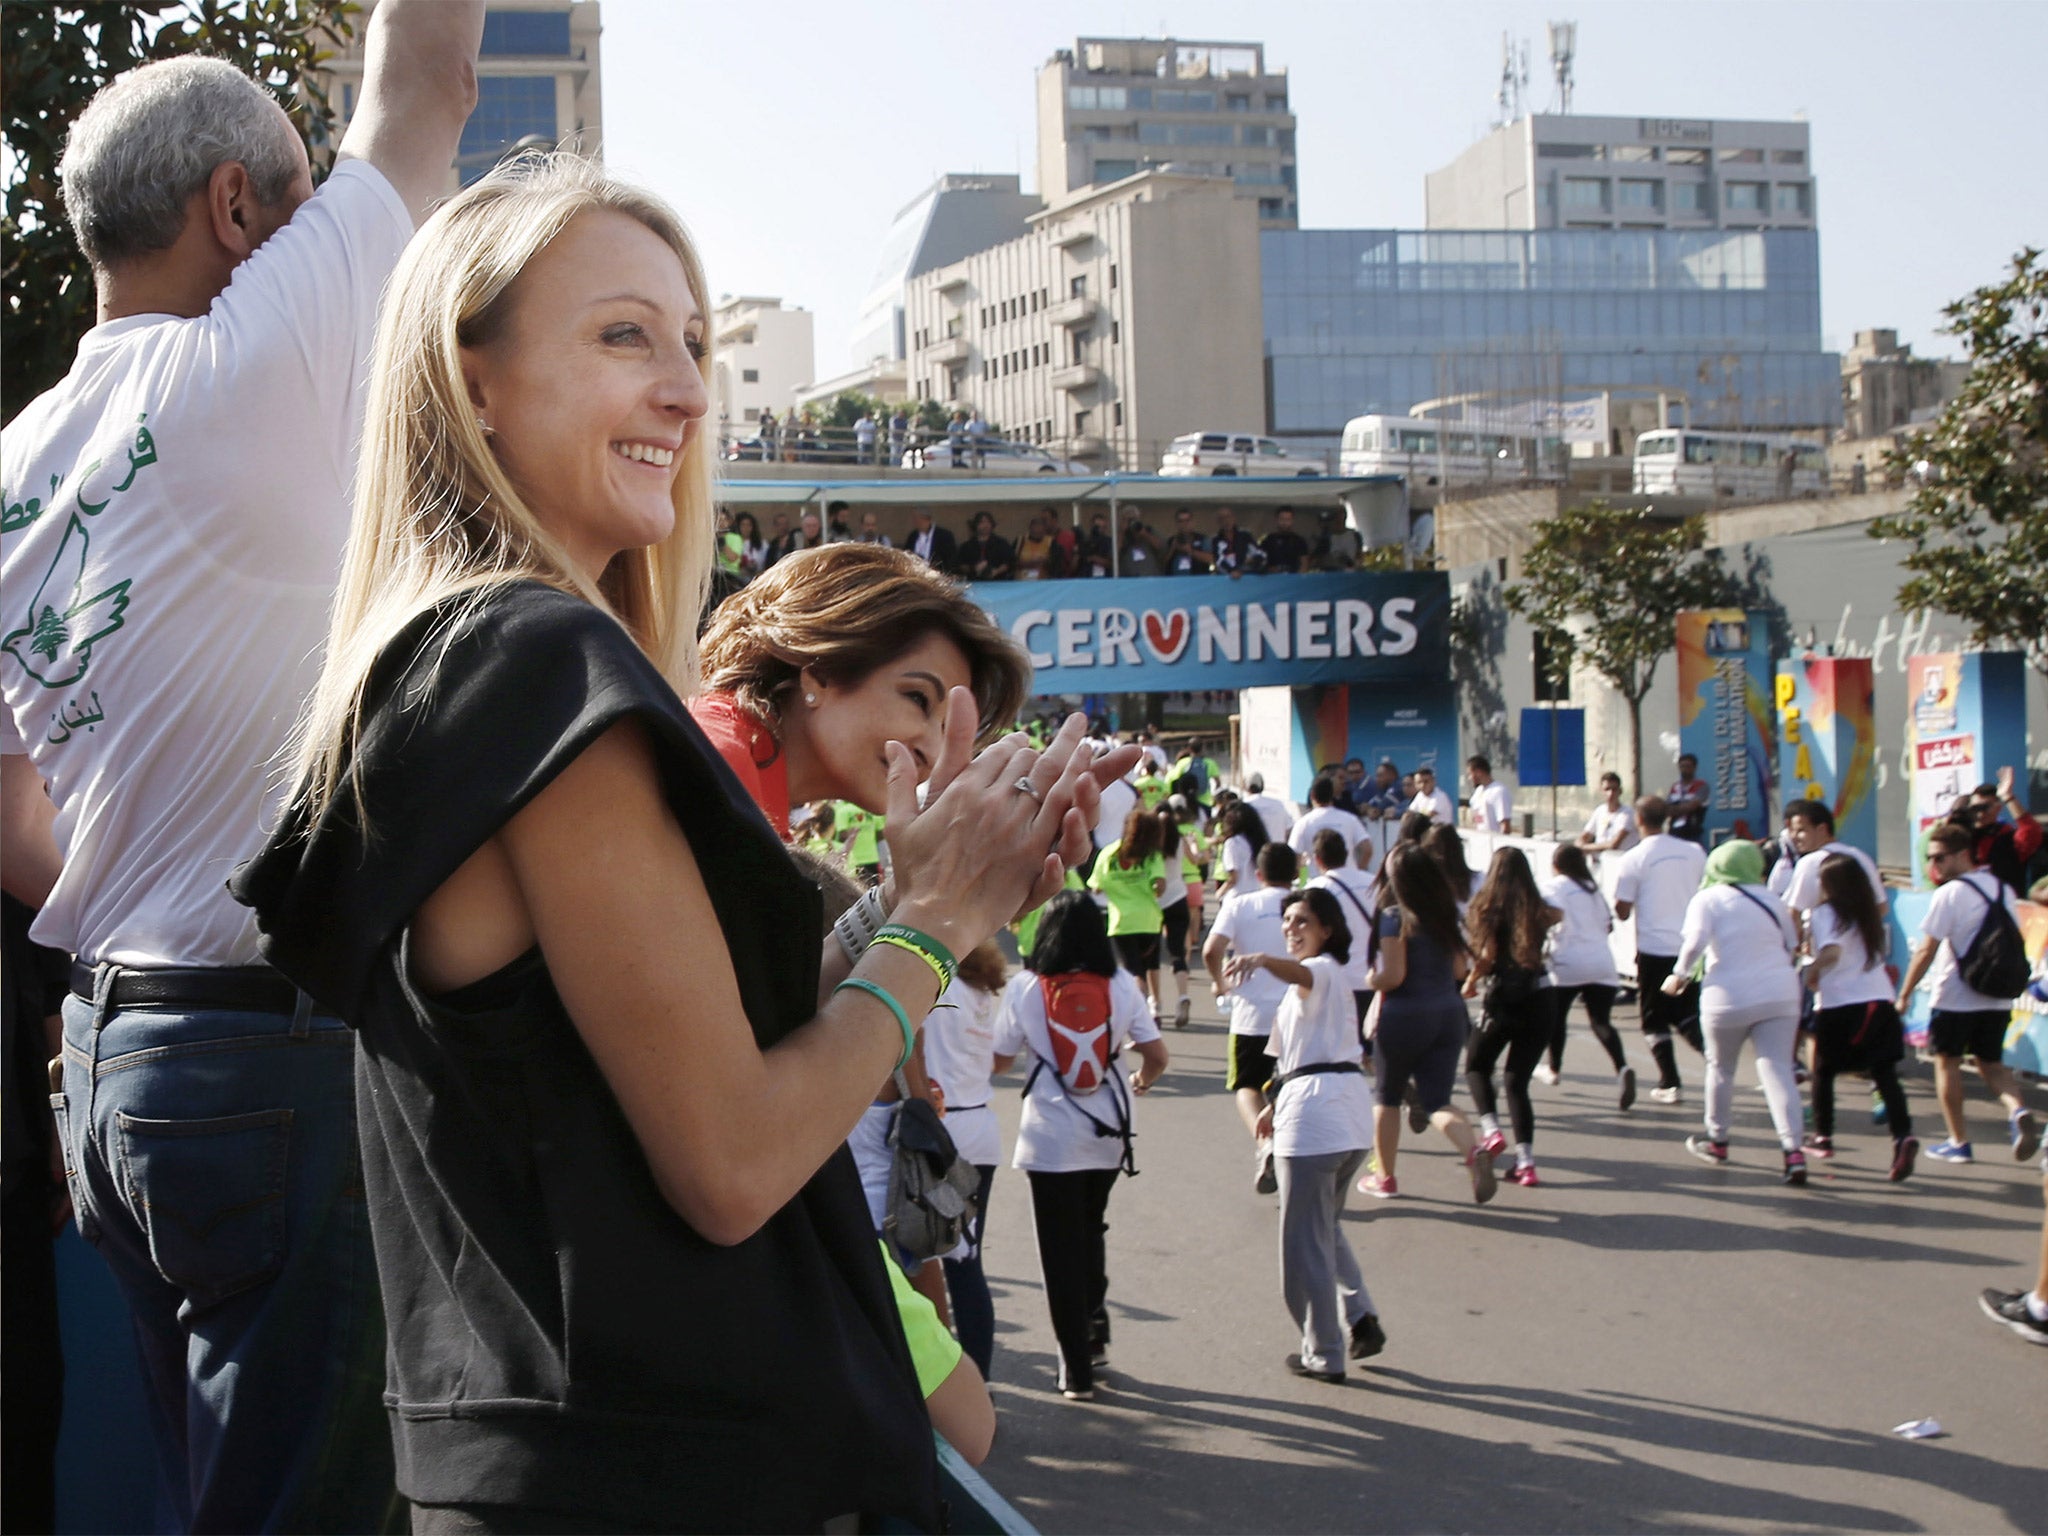 British athlete Paula Radcliffe gives encouragment to runners at the Beirut Marathon on Sunday